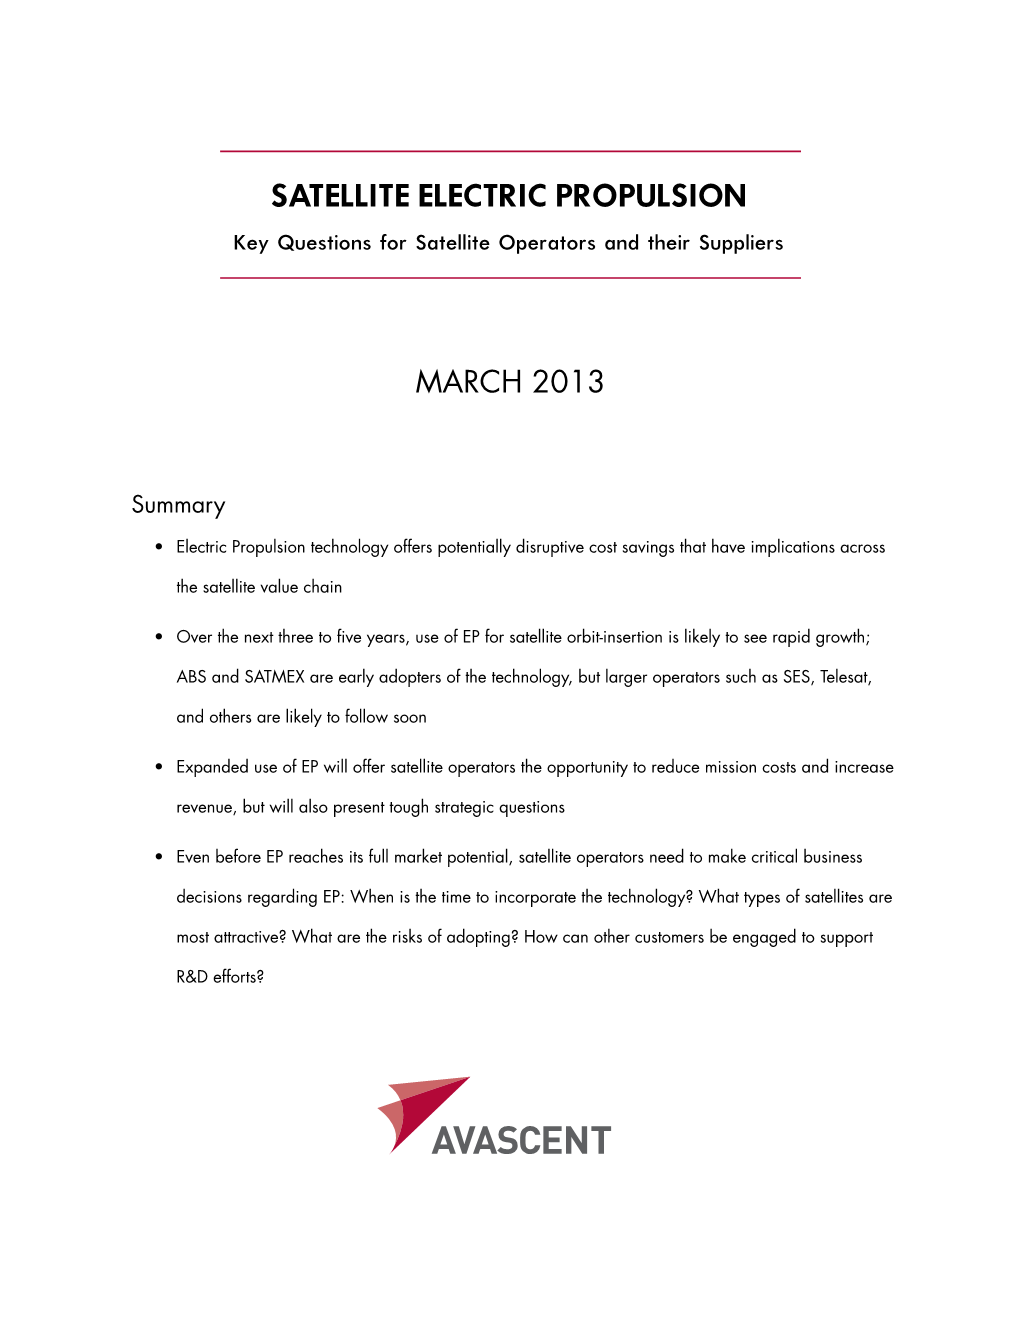 March 2013 Satellite Electric Propulsion